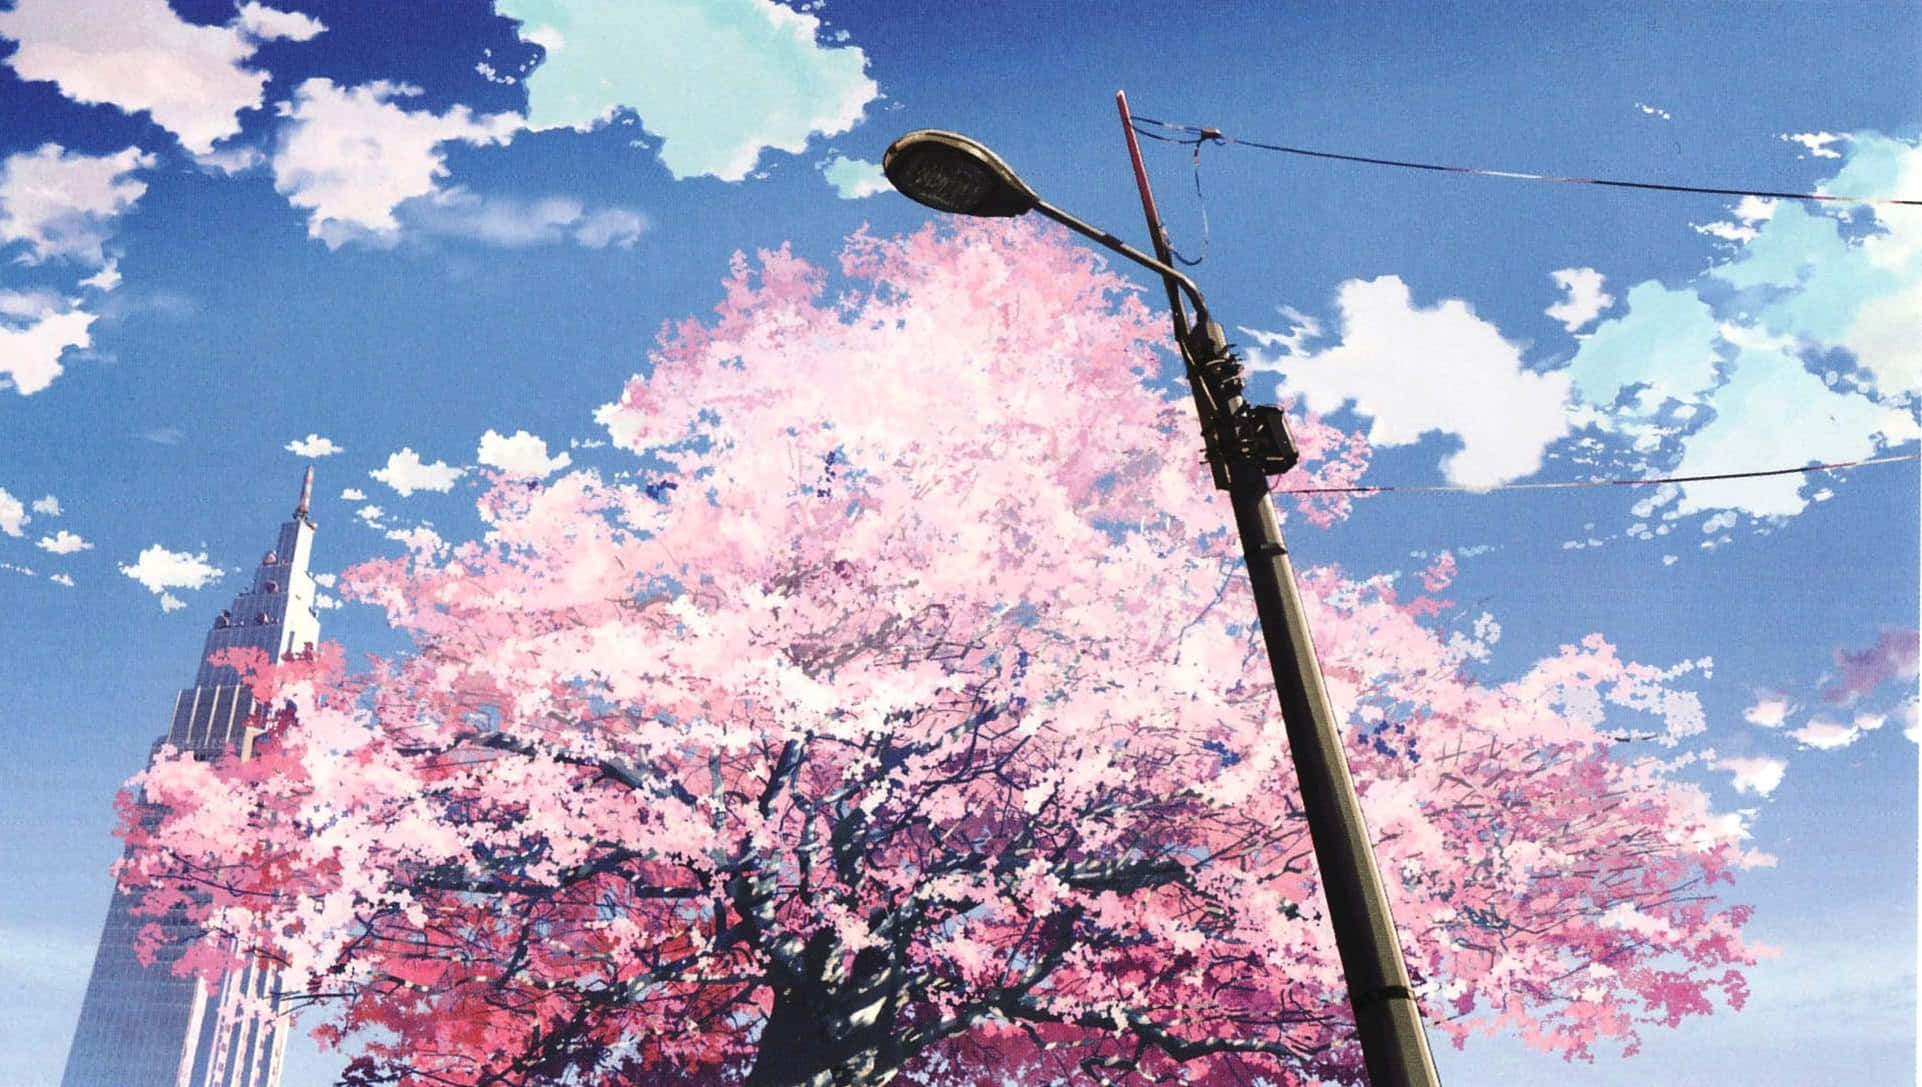 Stunning Cherry Blossom Tree in Full Bloom